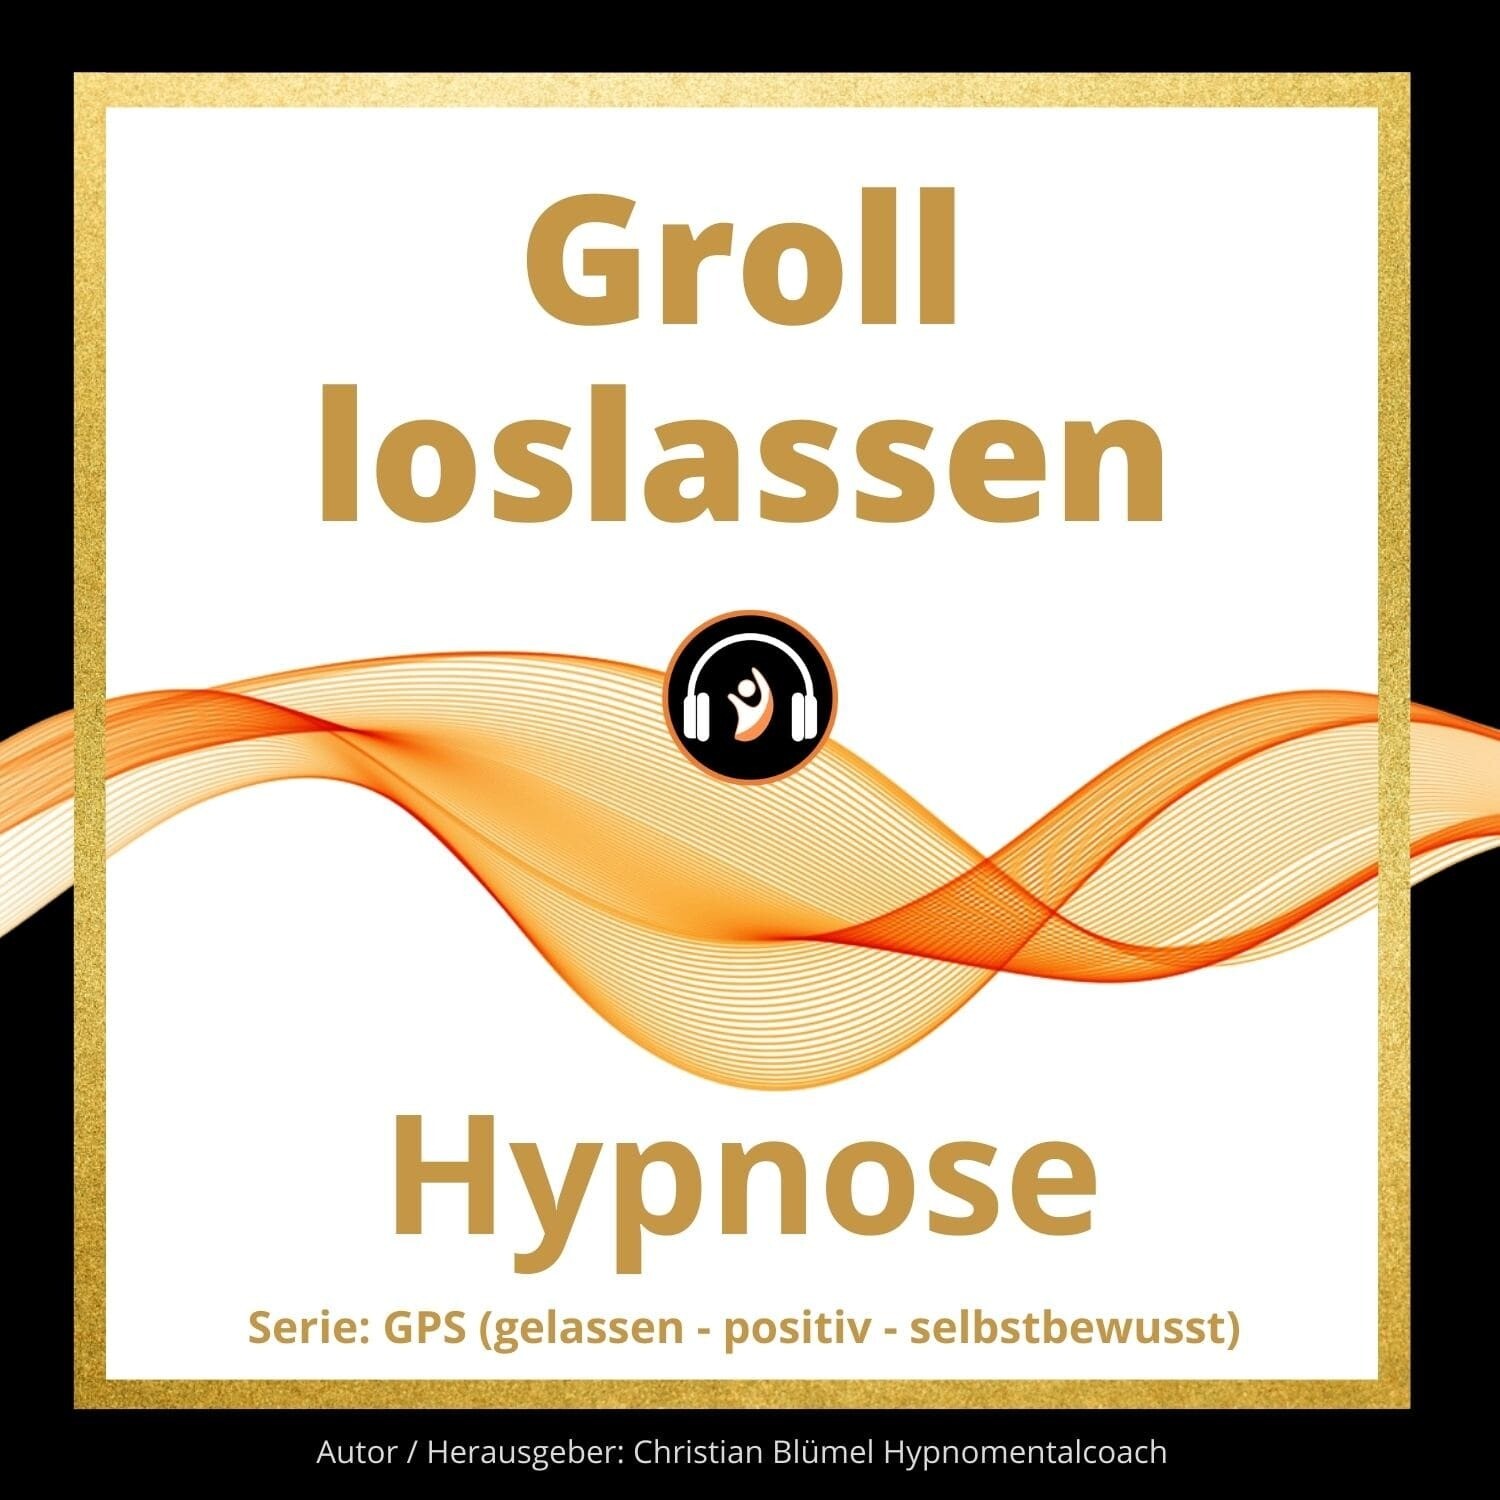 Audio Hypnose: Groll loslassen - GPS Hypnose